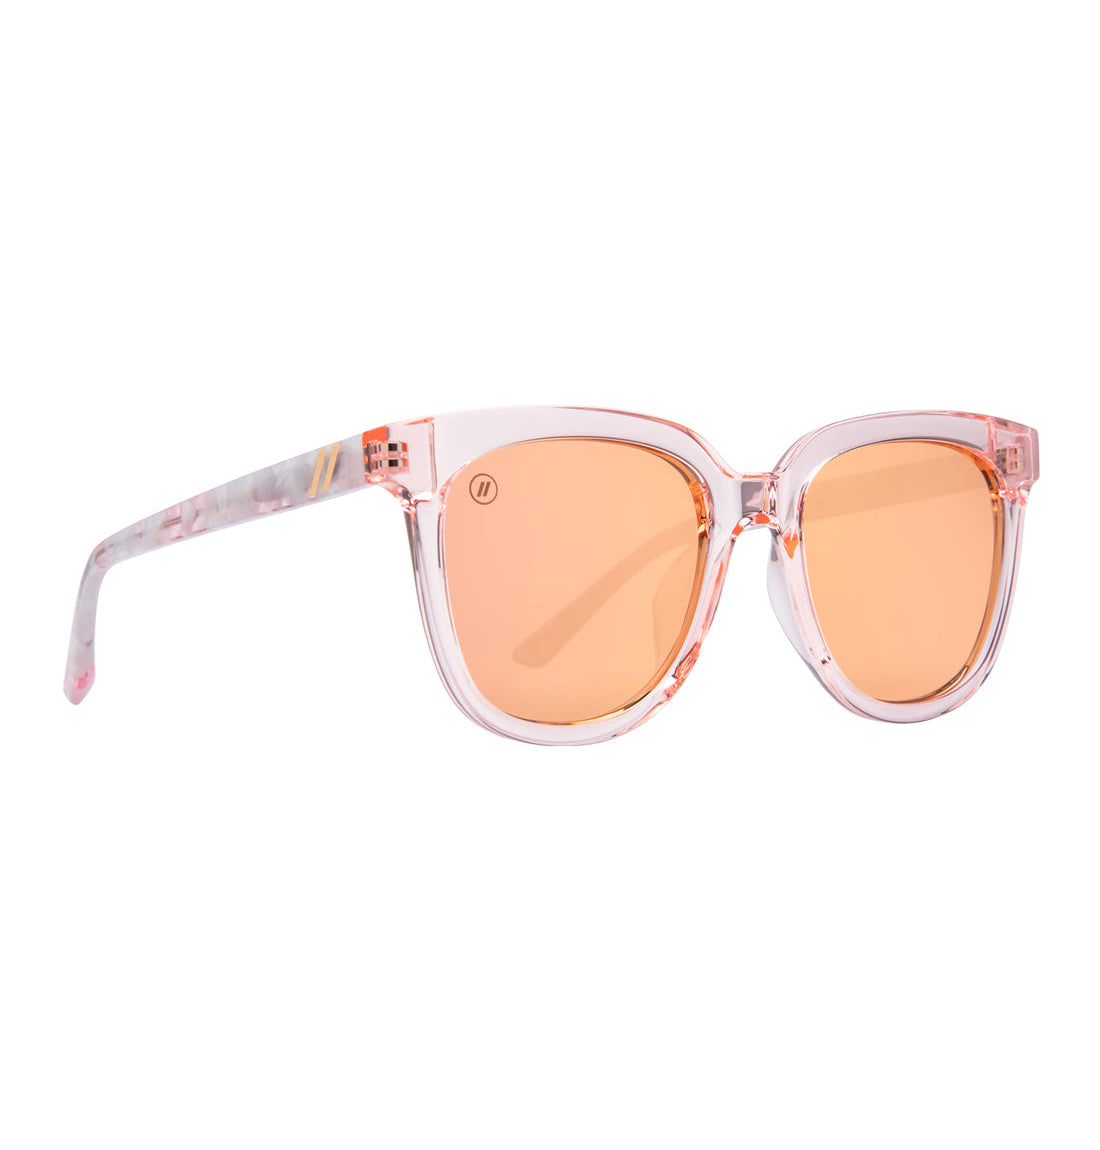 Blenders Grove Polarized Sunglasses GemstoneGal BE4106Peach/Champagne